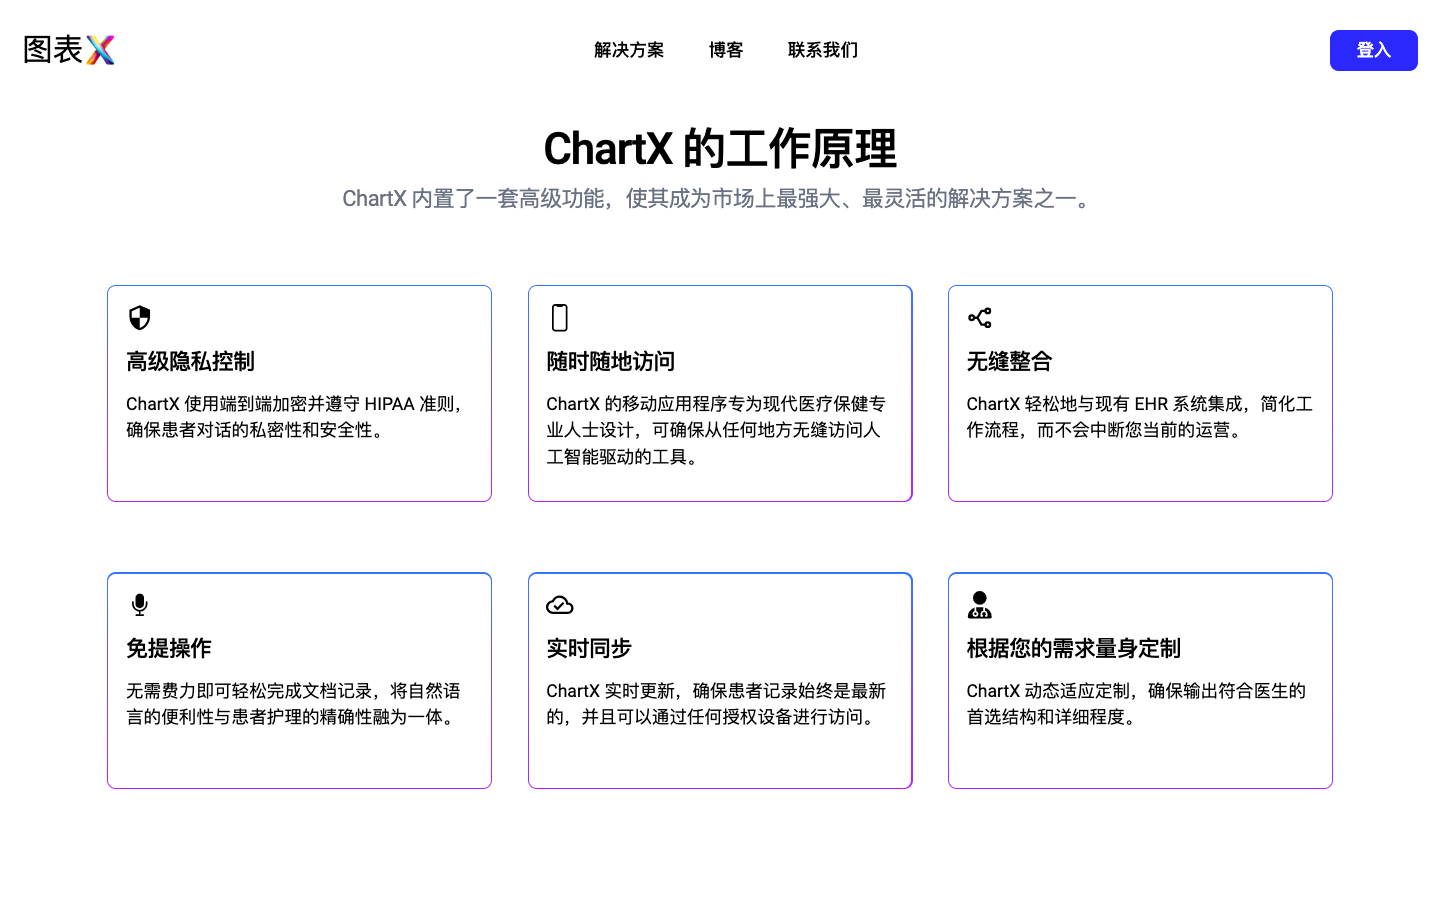 ChartX - AI医疗